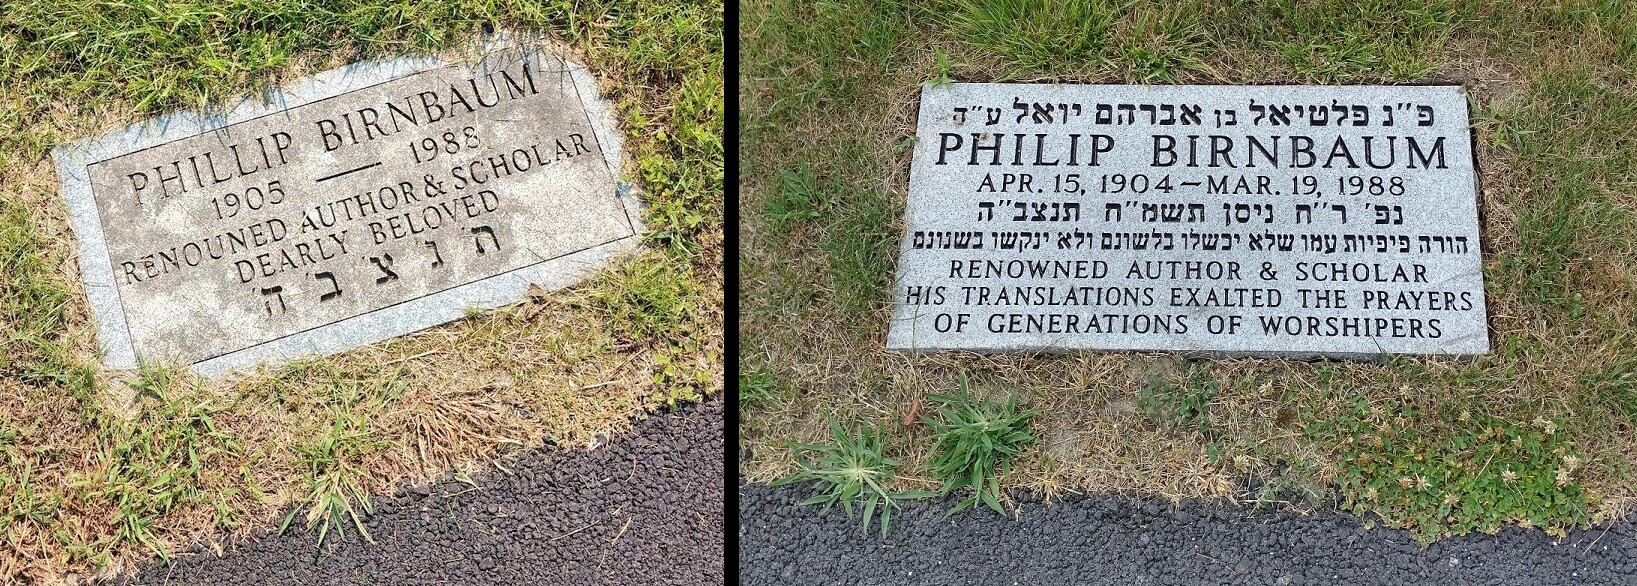 Author Philip Birnbaum's old gravestone, left, and his new one, right.